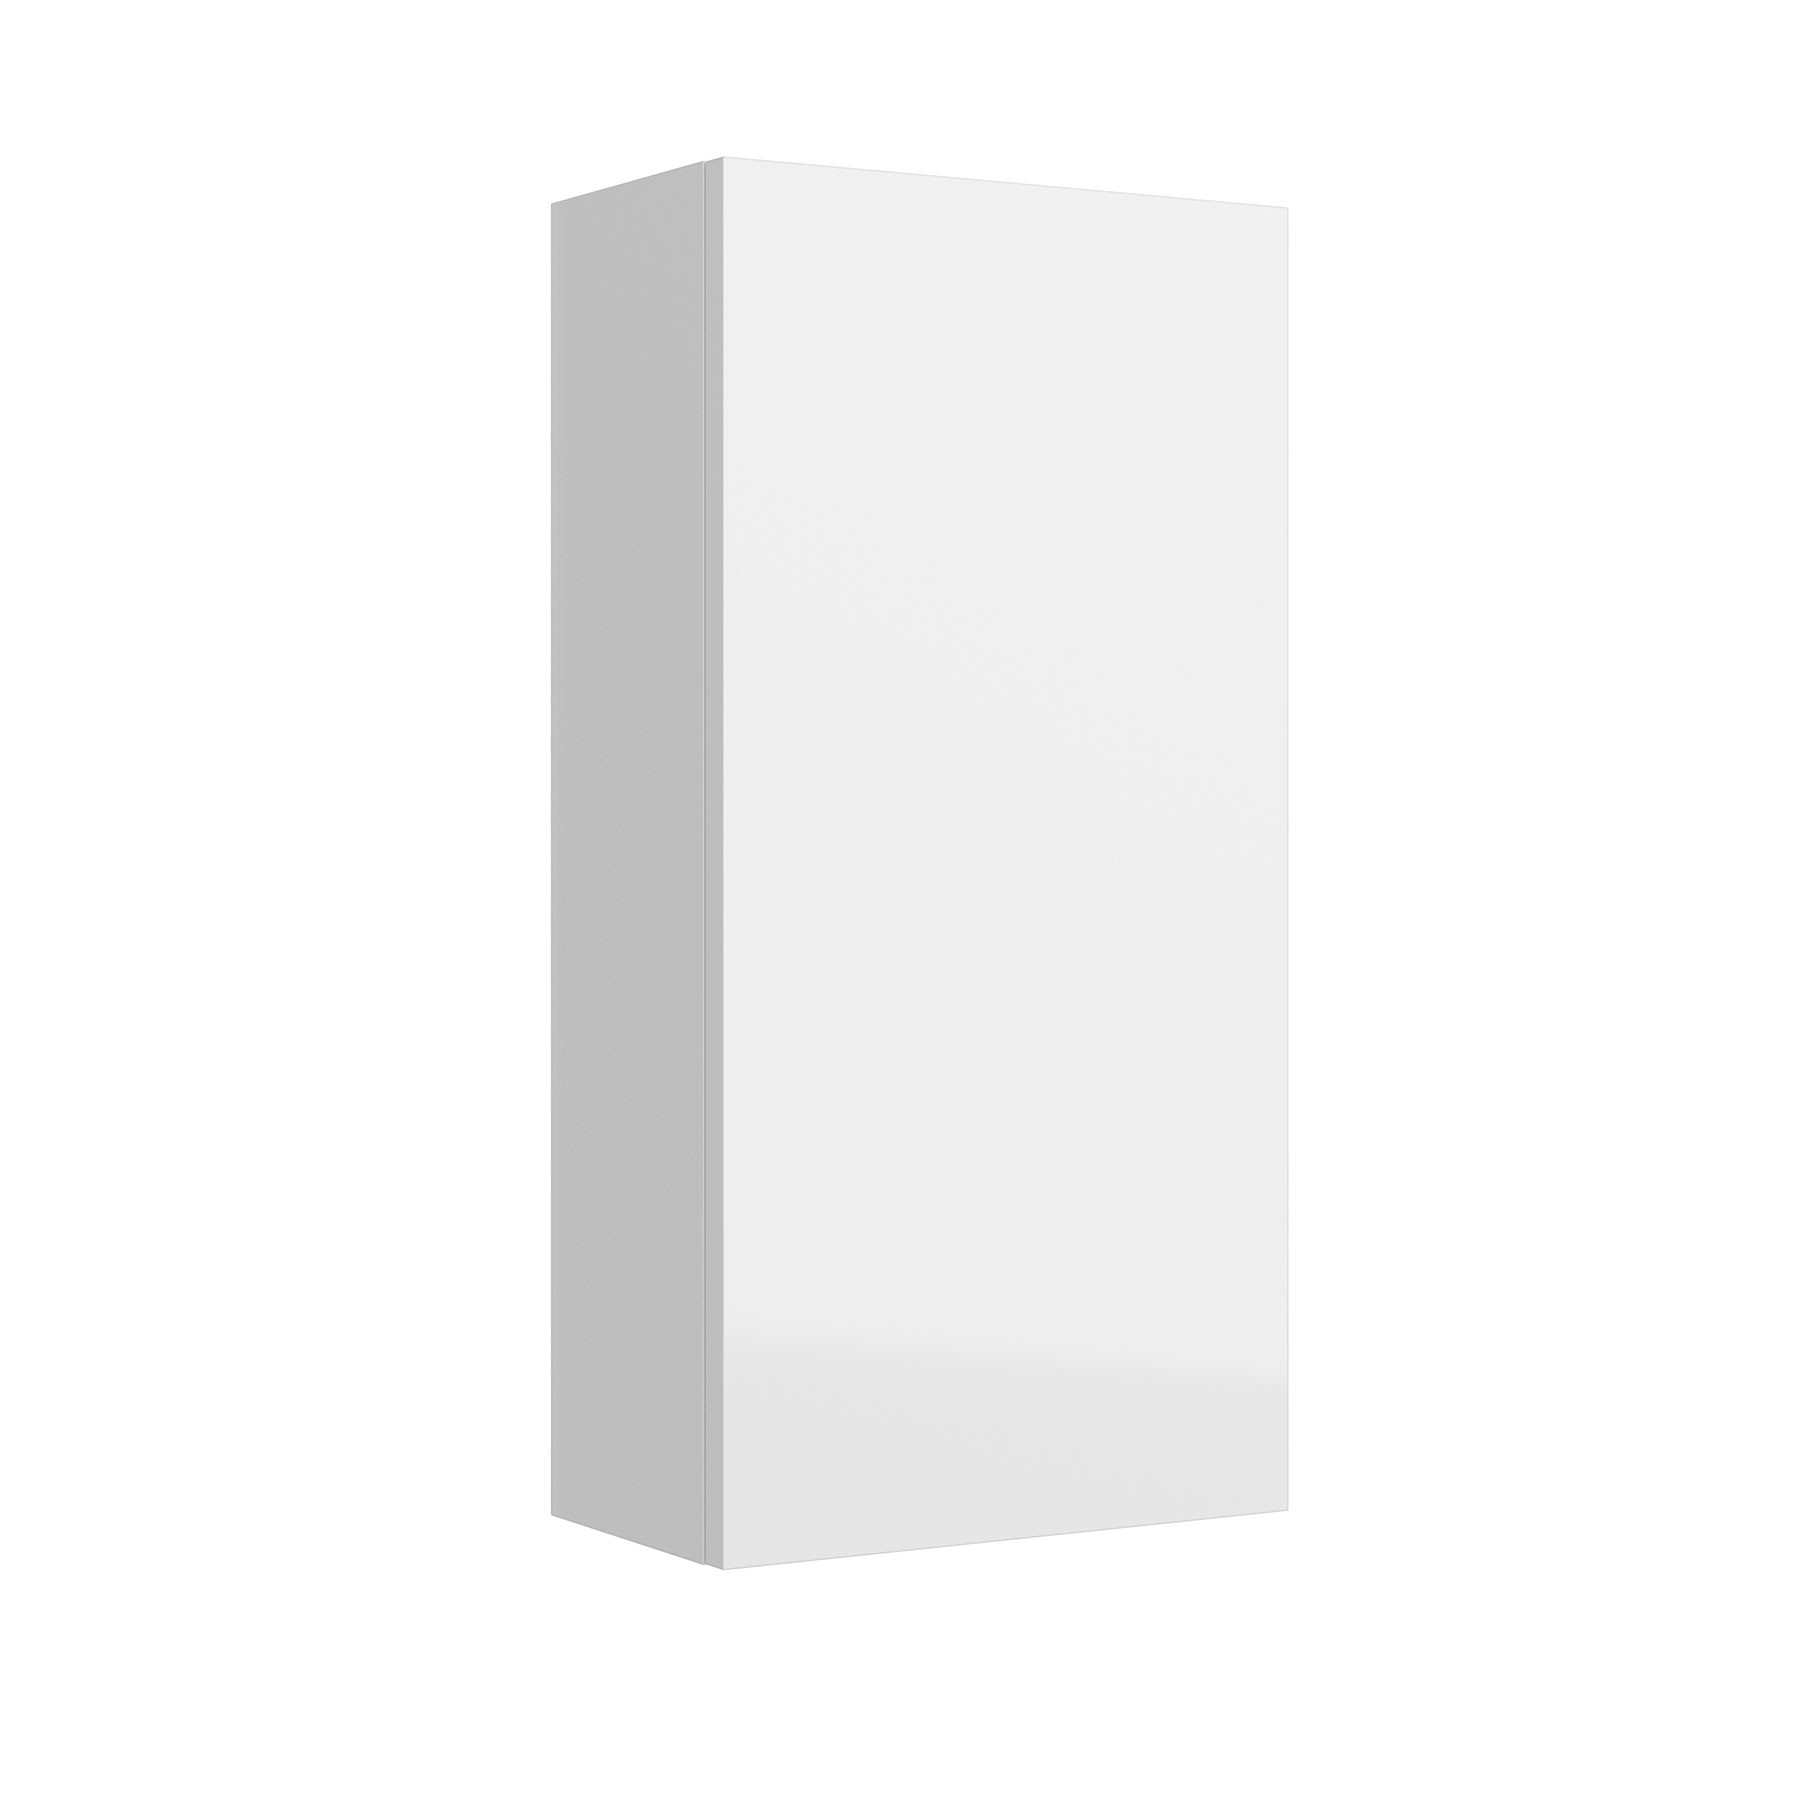 Mdulo Infinity 1 puerta blanco brillo 600 x 300 mm